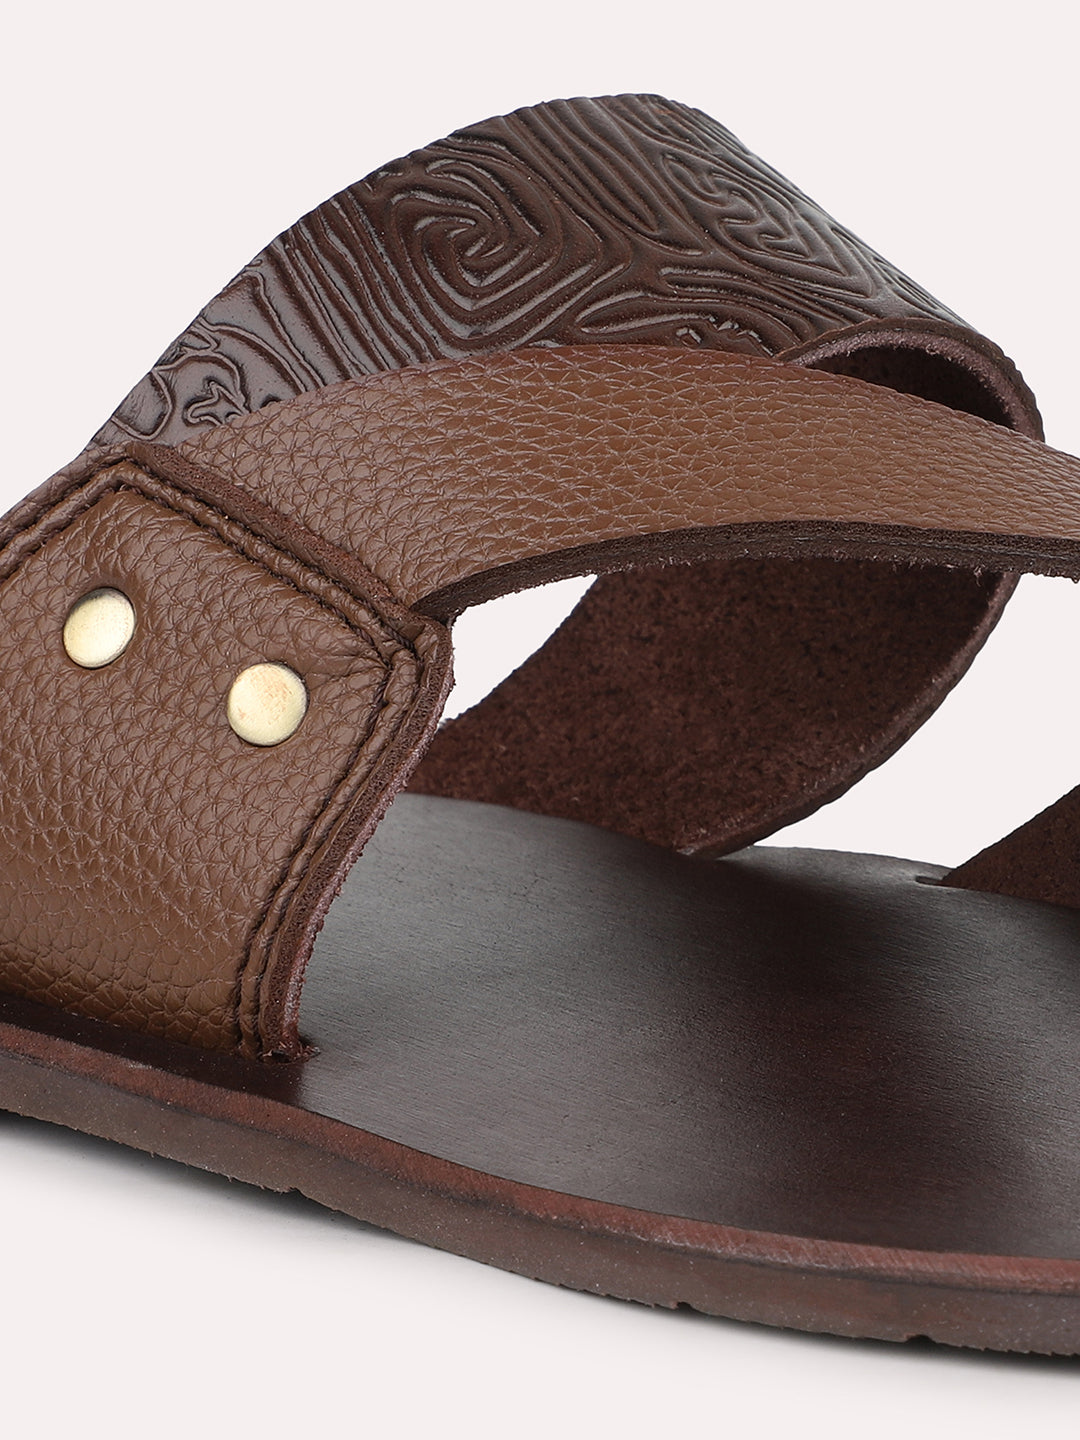 Privo Brown One Toe Casual Sandal For Mens